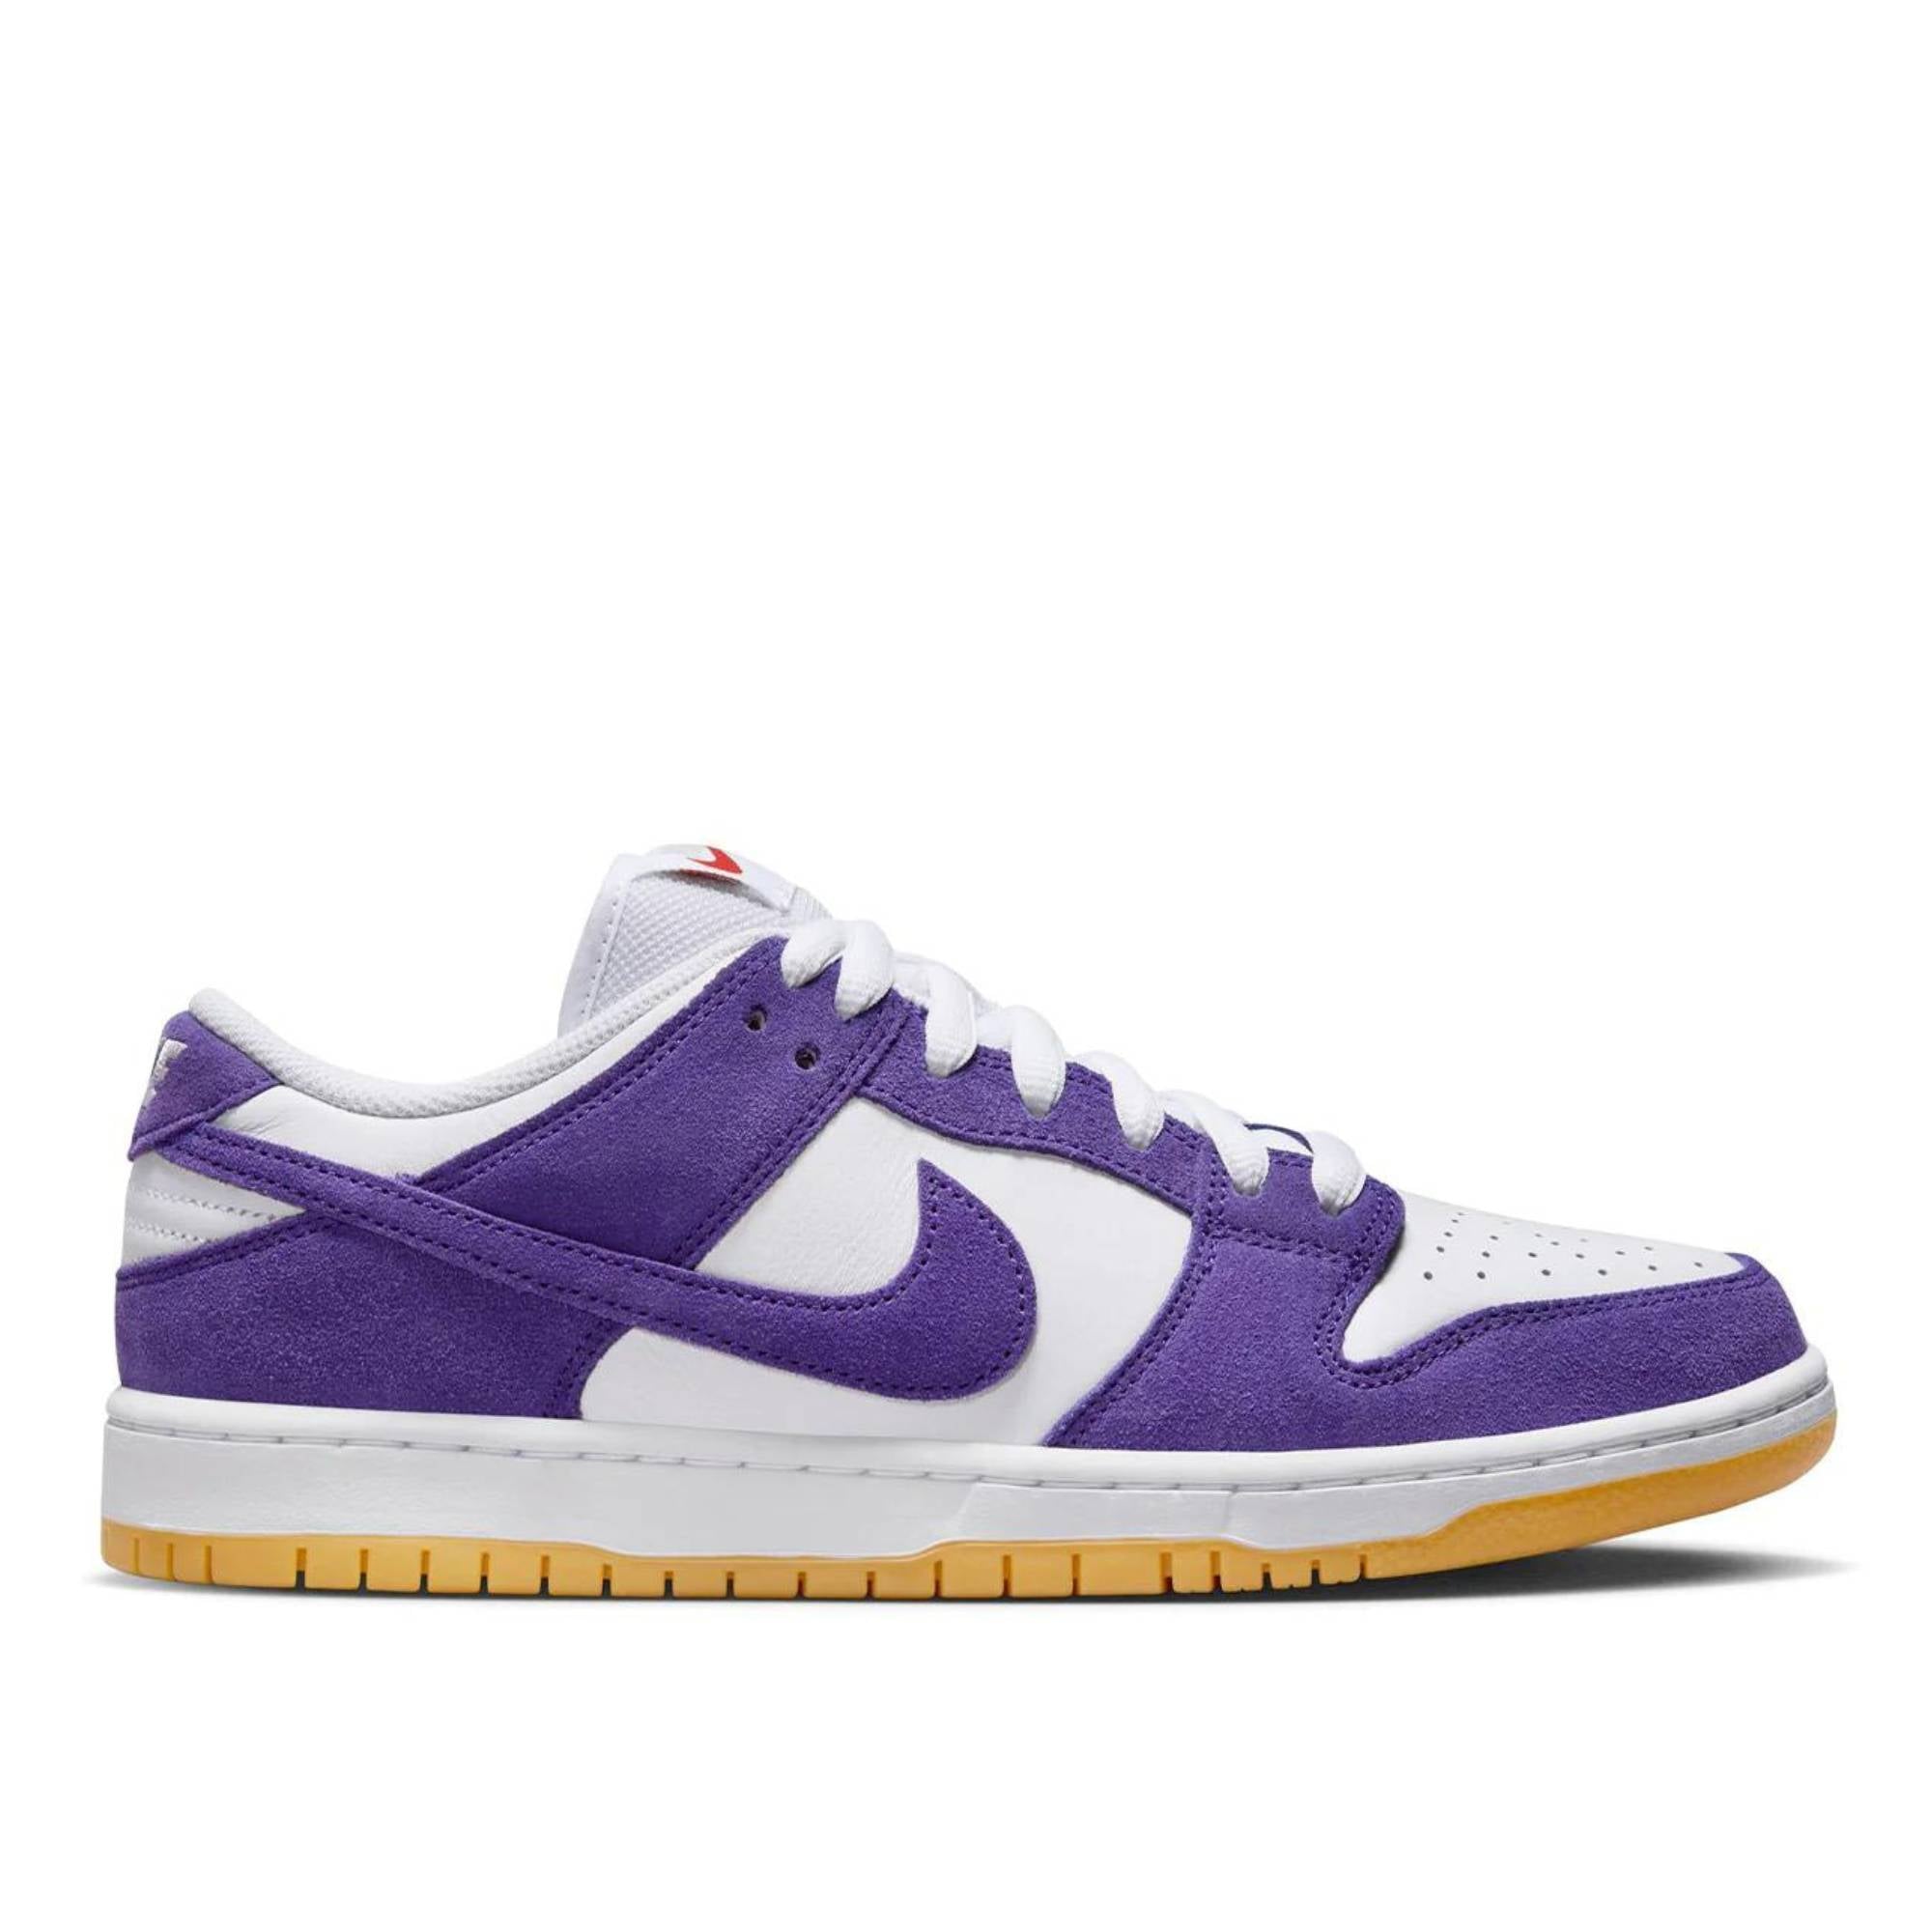 Nike Sb Dunk Low Pro Iso ’Court Purple’ Sneakers